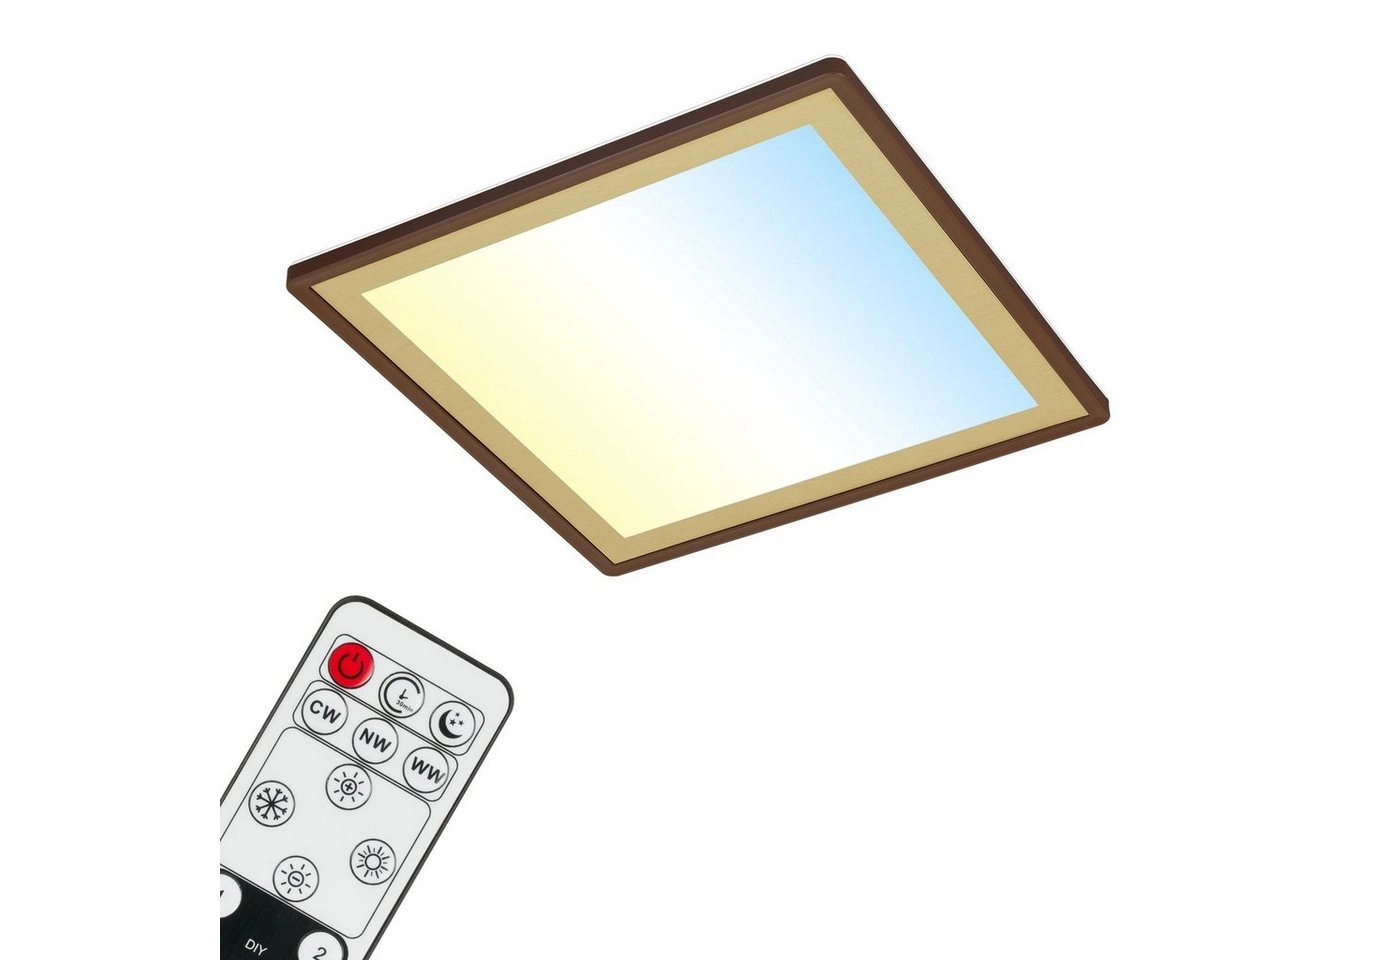 Ultraflaches CCT-LED Panel mit LED Backlight, 10 cm, 1x LED, 22 W, 3000 lm, braun-gold